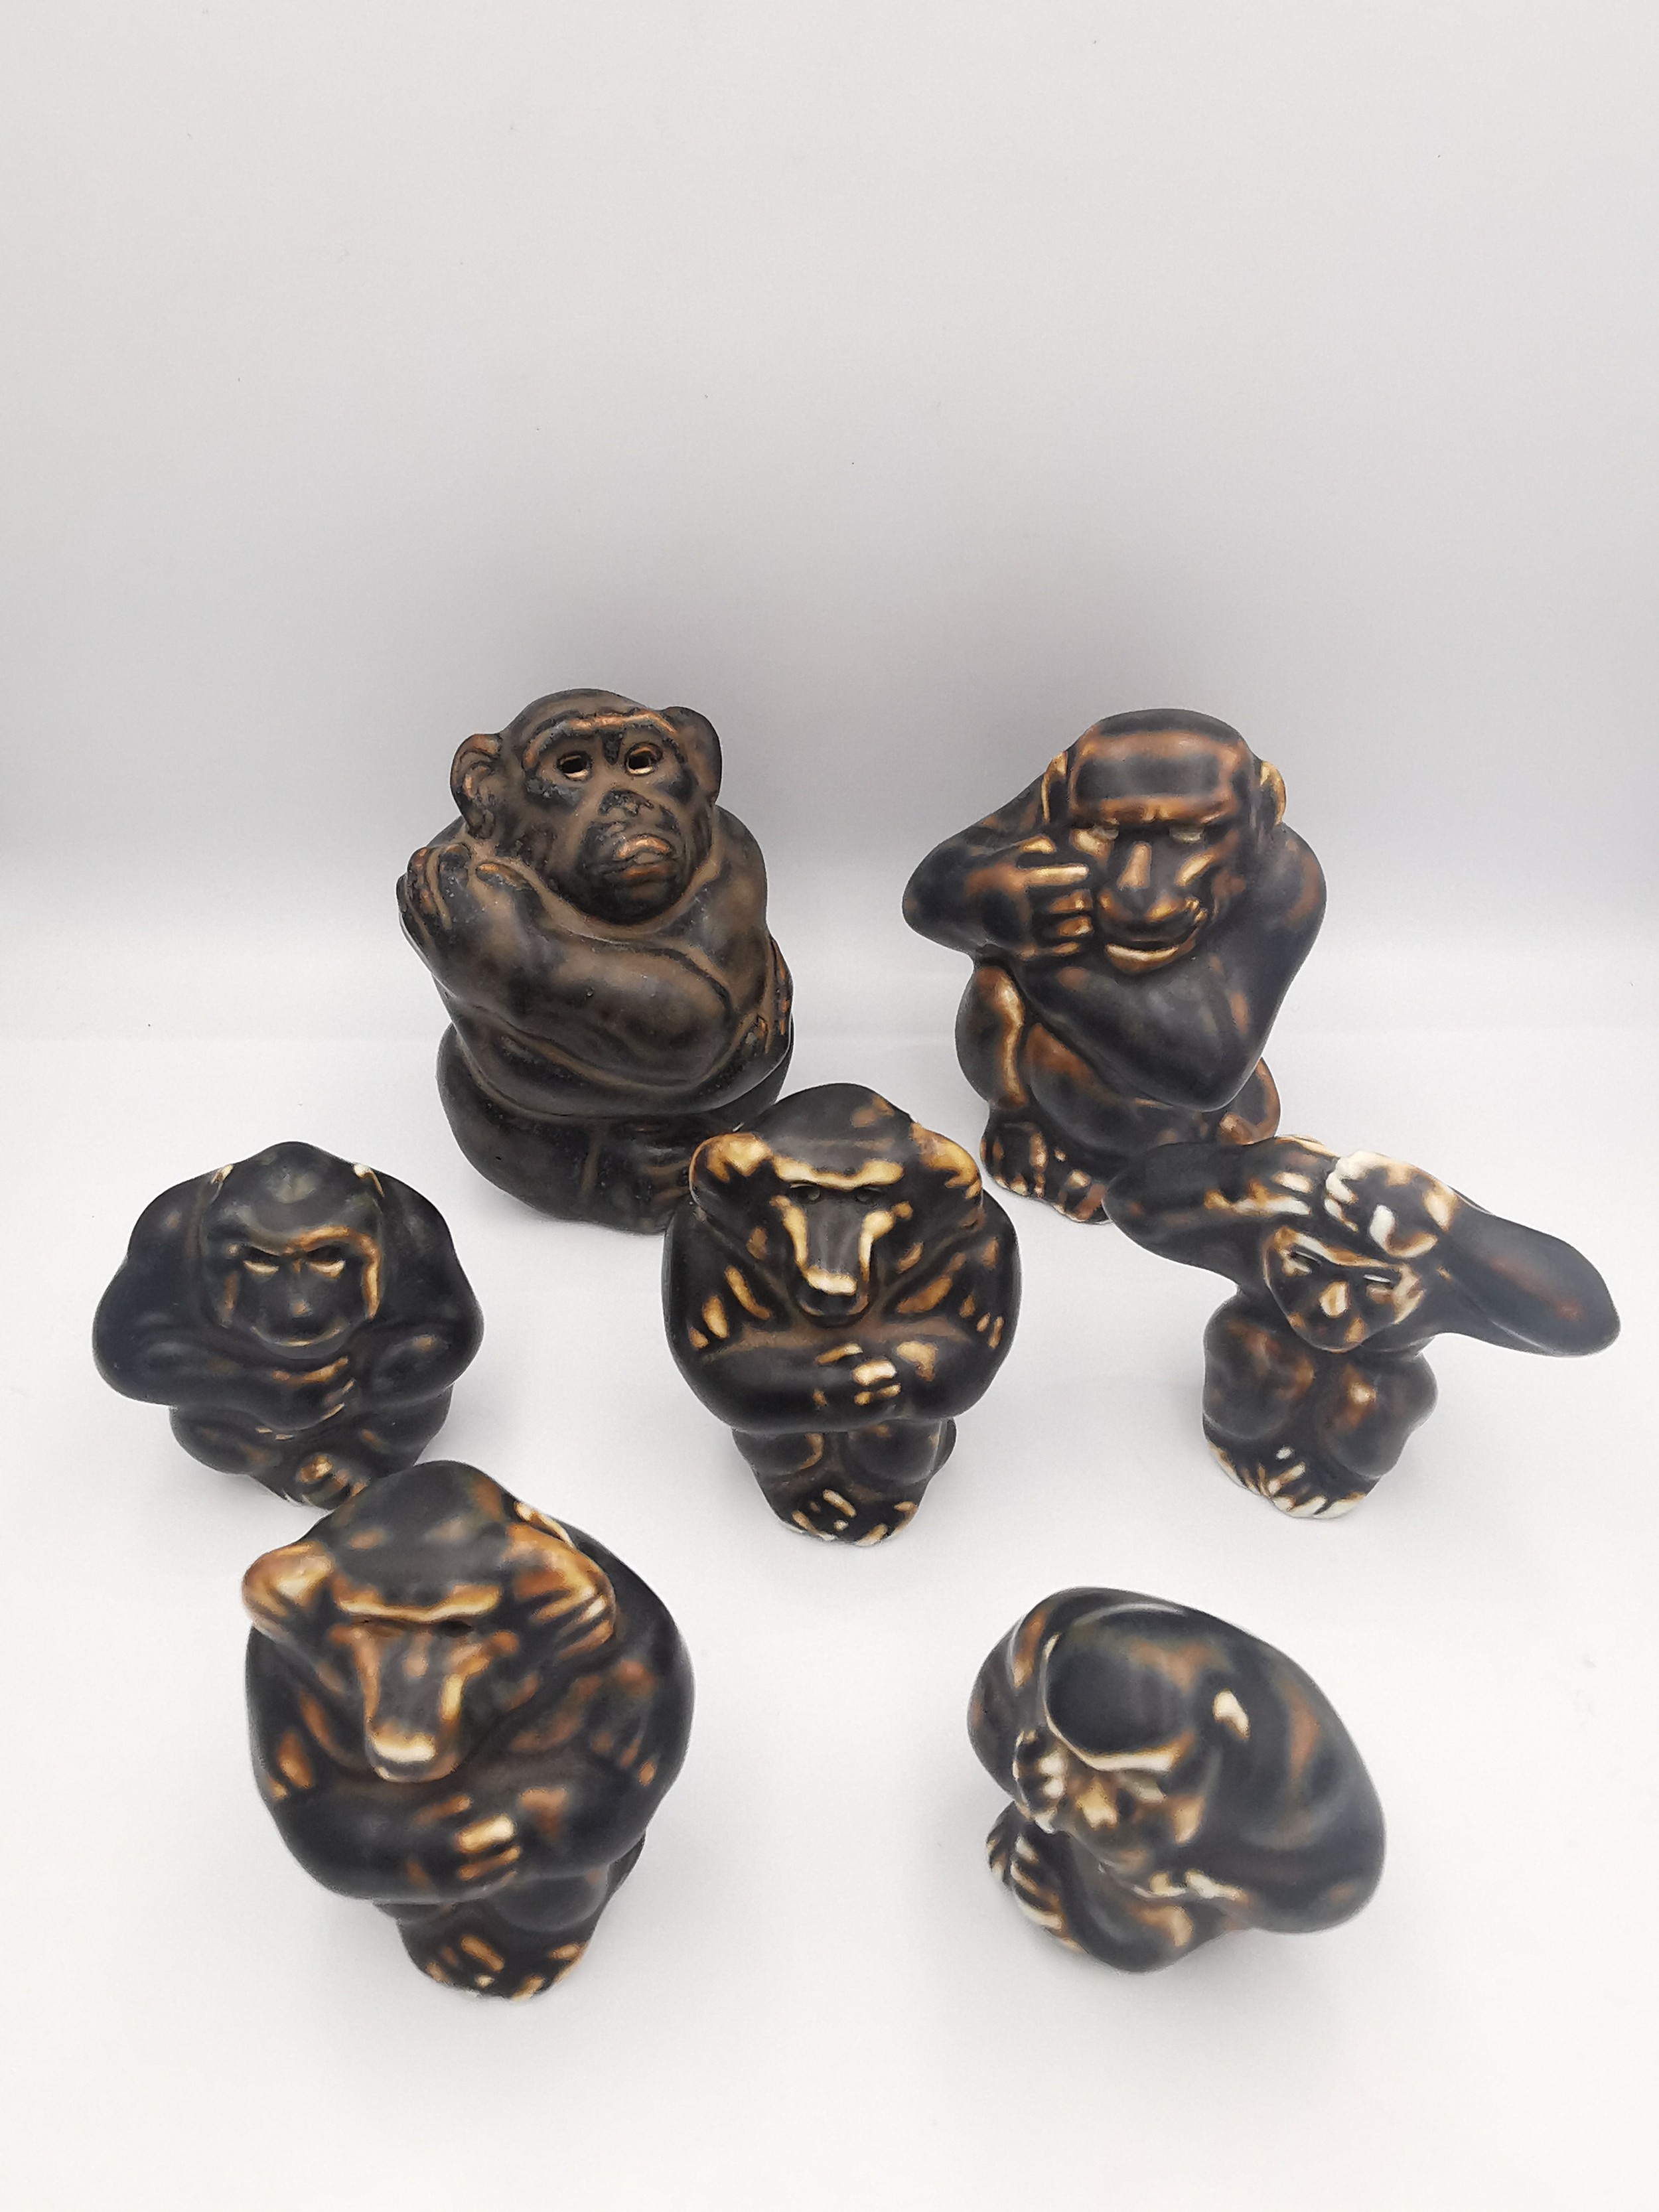 Knud Kyhn, Danish, (1880 - 1969). A collection of seven treacle glaze Royal Copenhagen stoneware